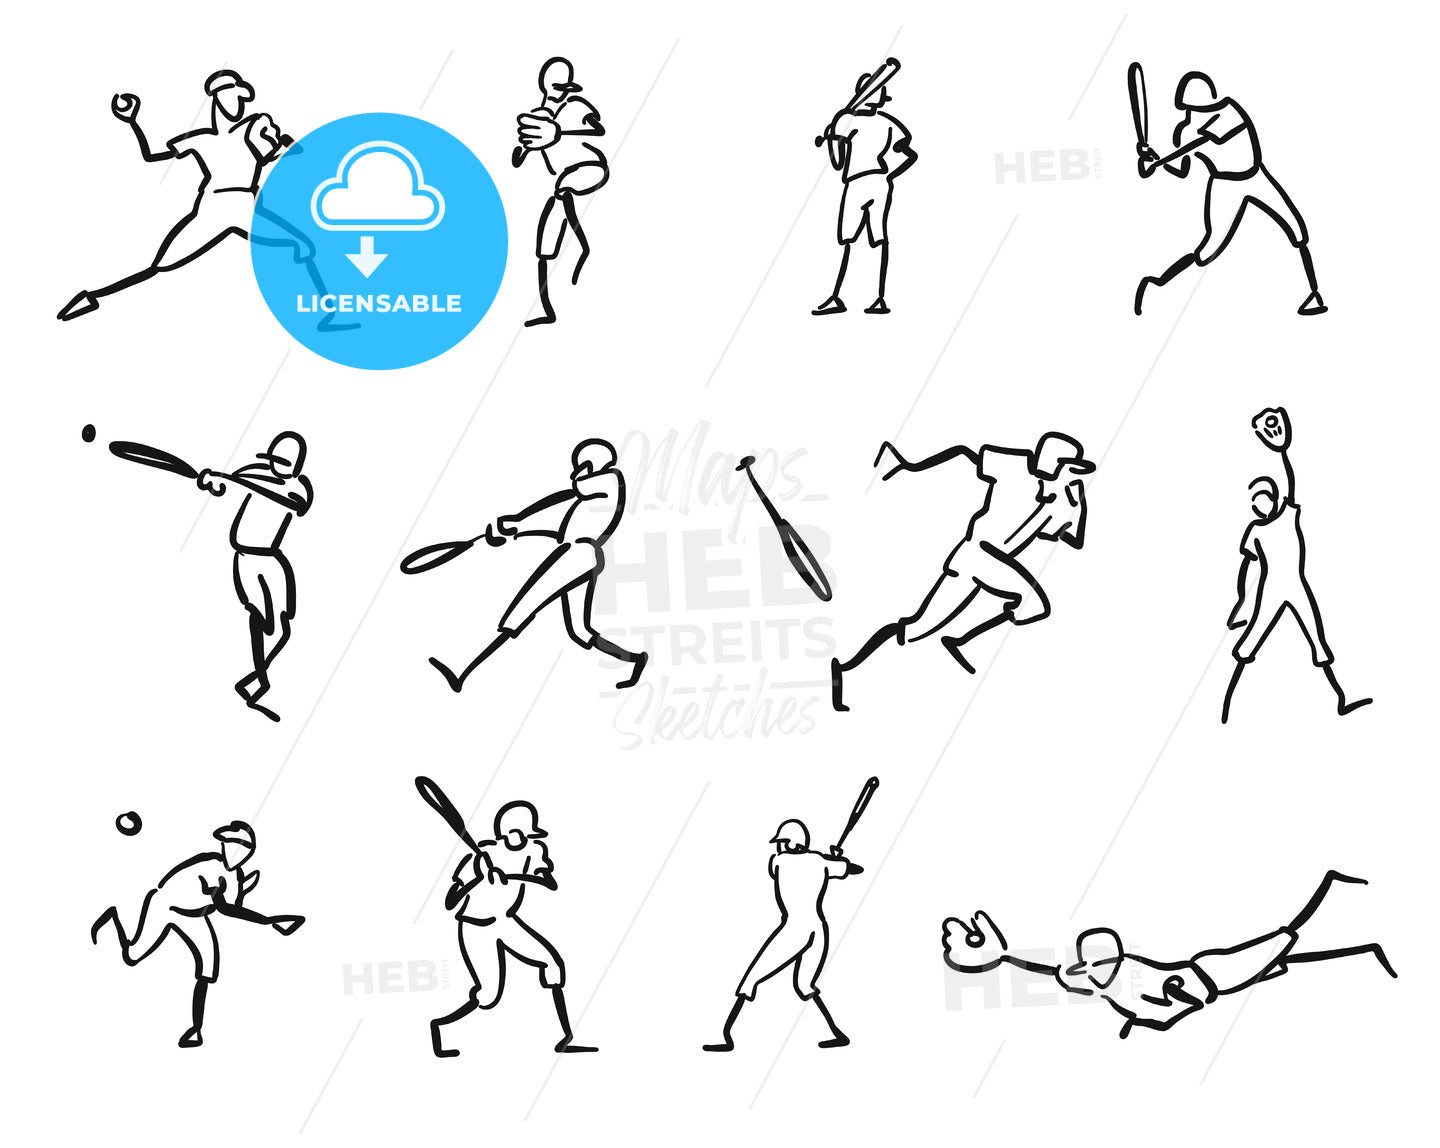 Baseball Player Motion Sketch Studies – instant download